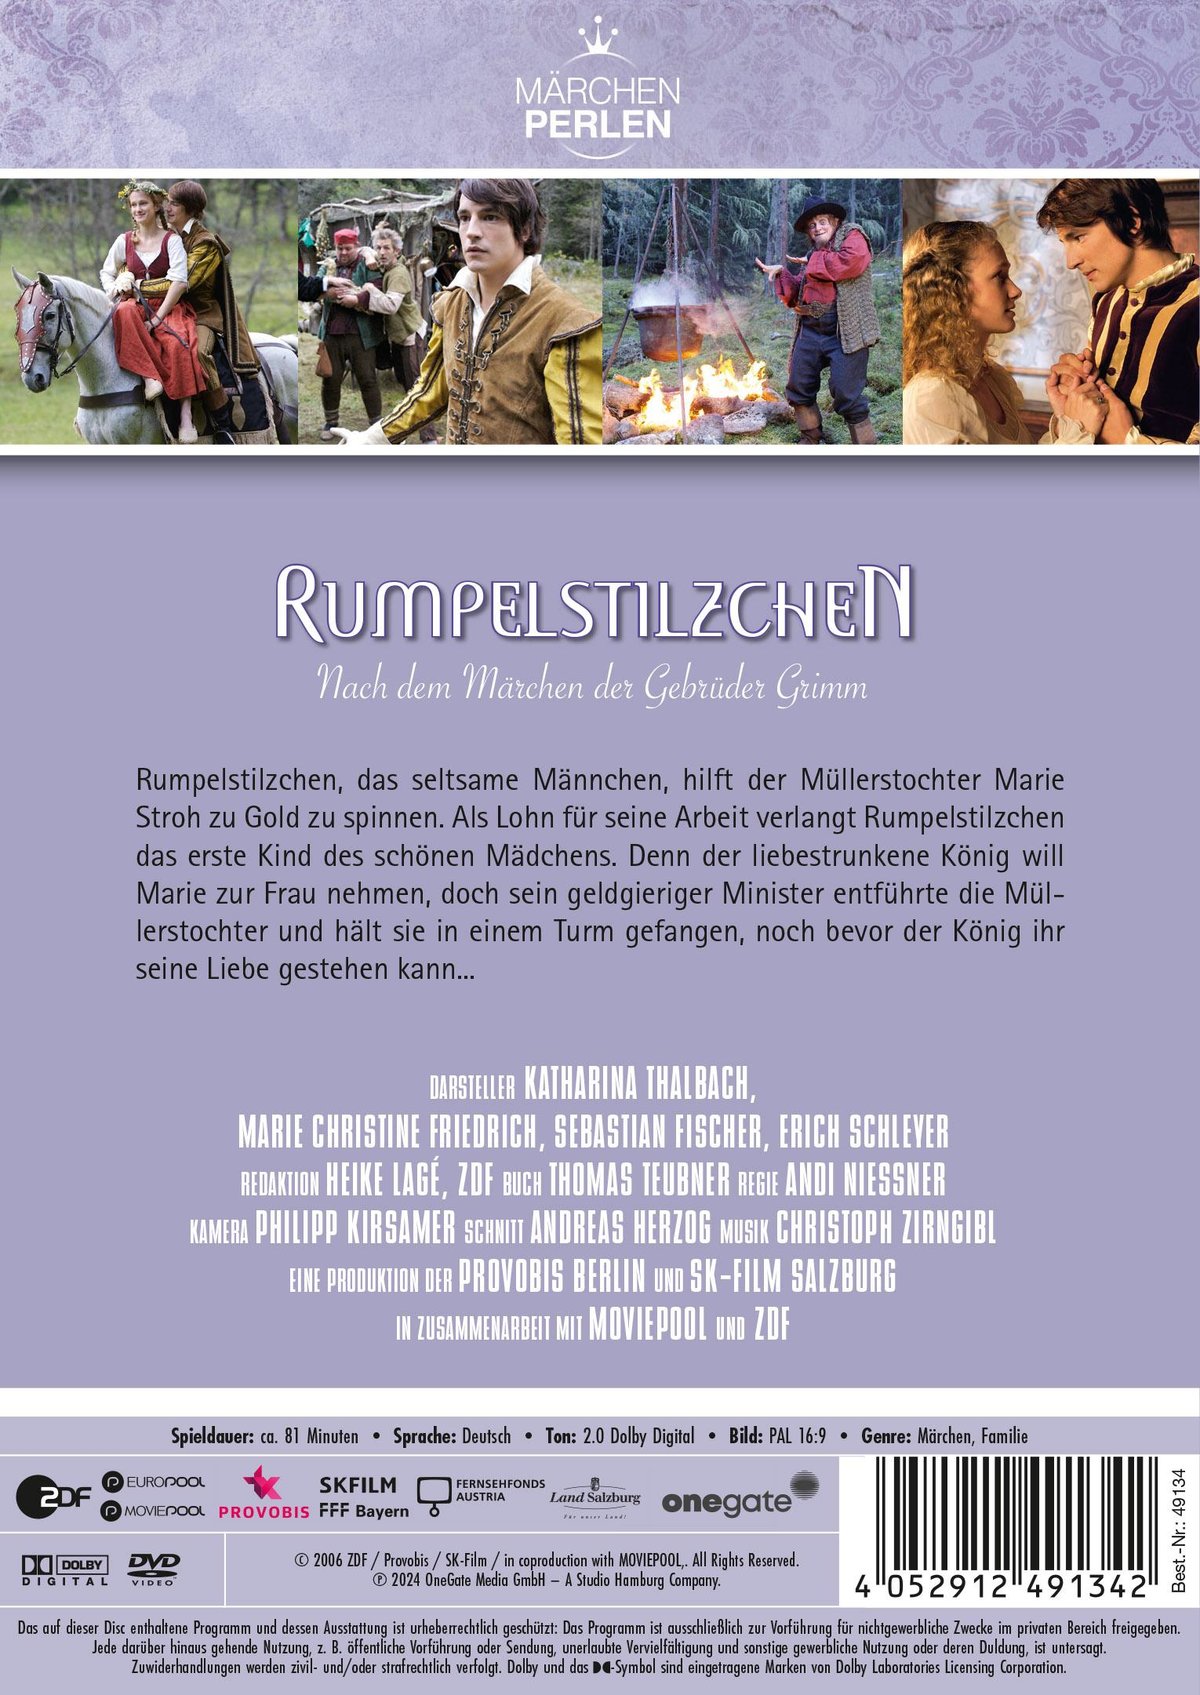 Märchenperlen: Rumpelstilzchen  (DVD)